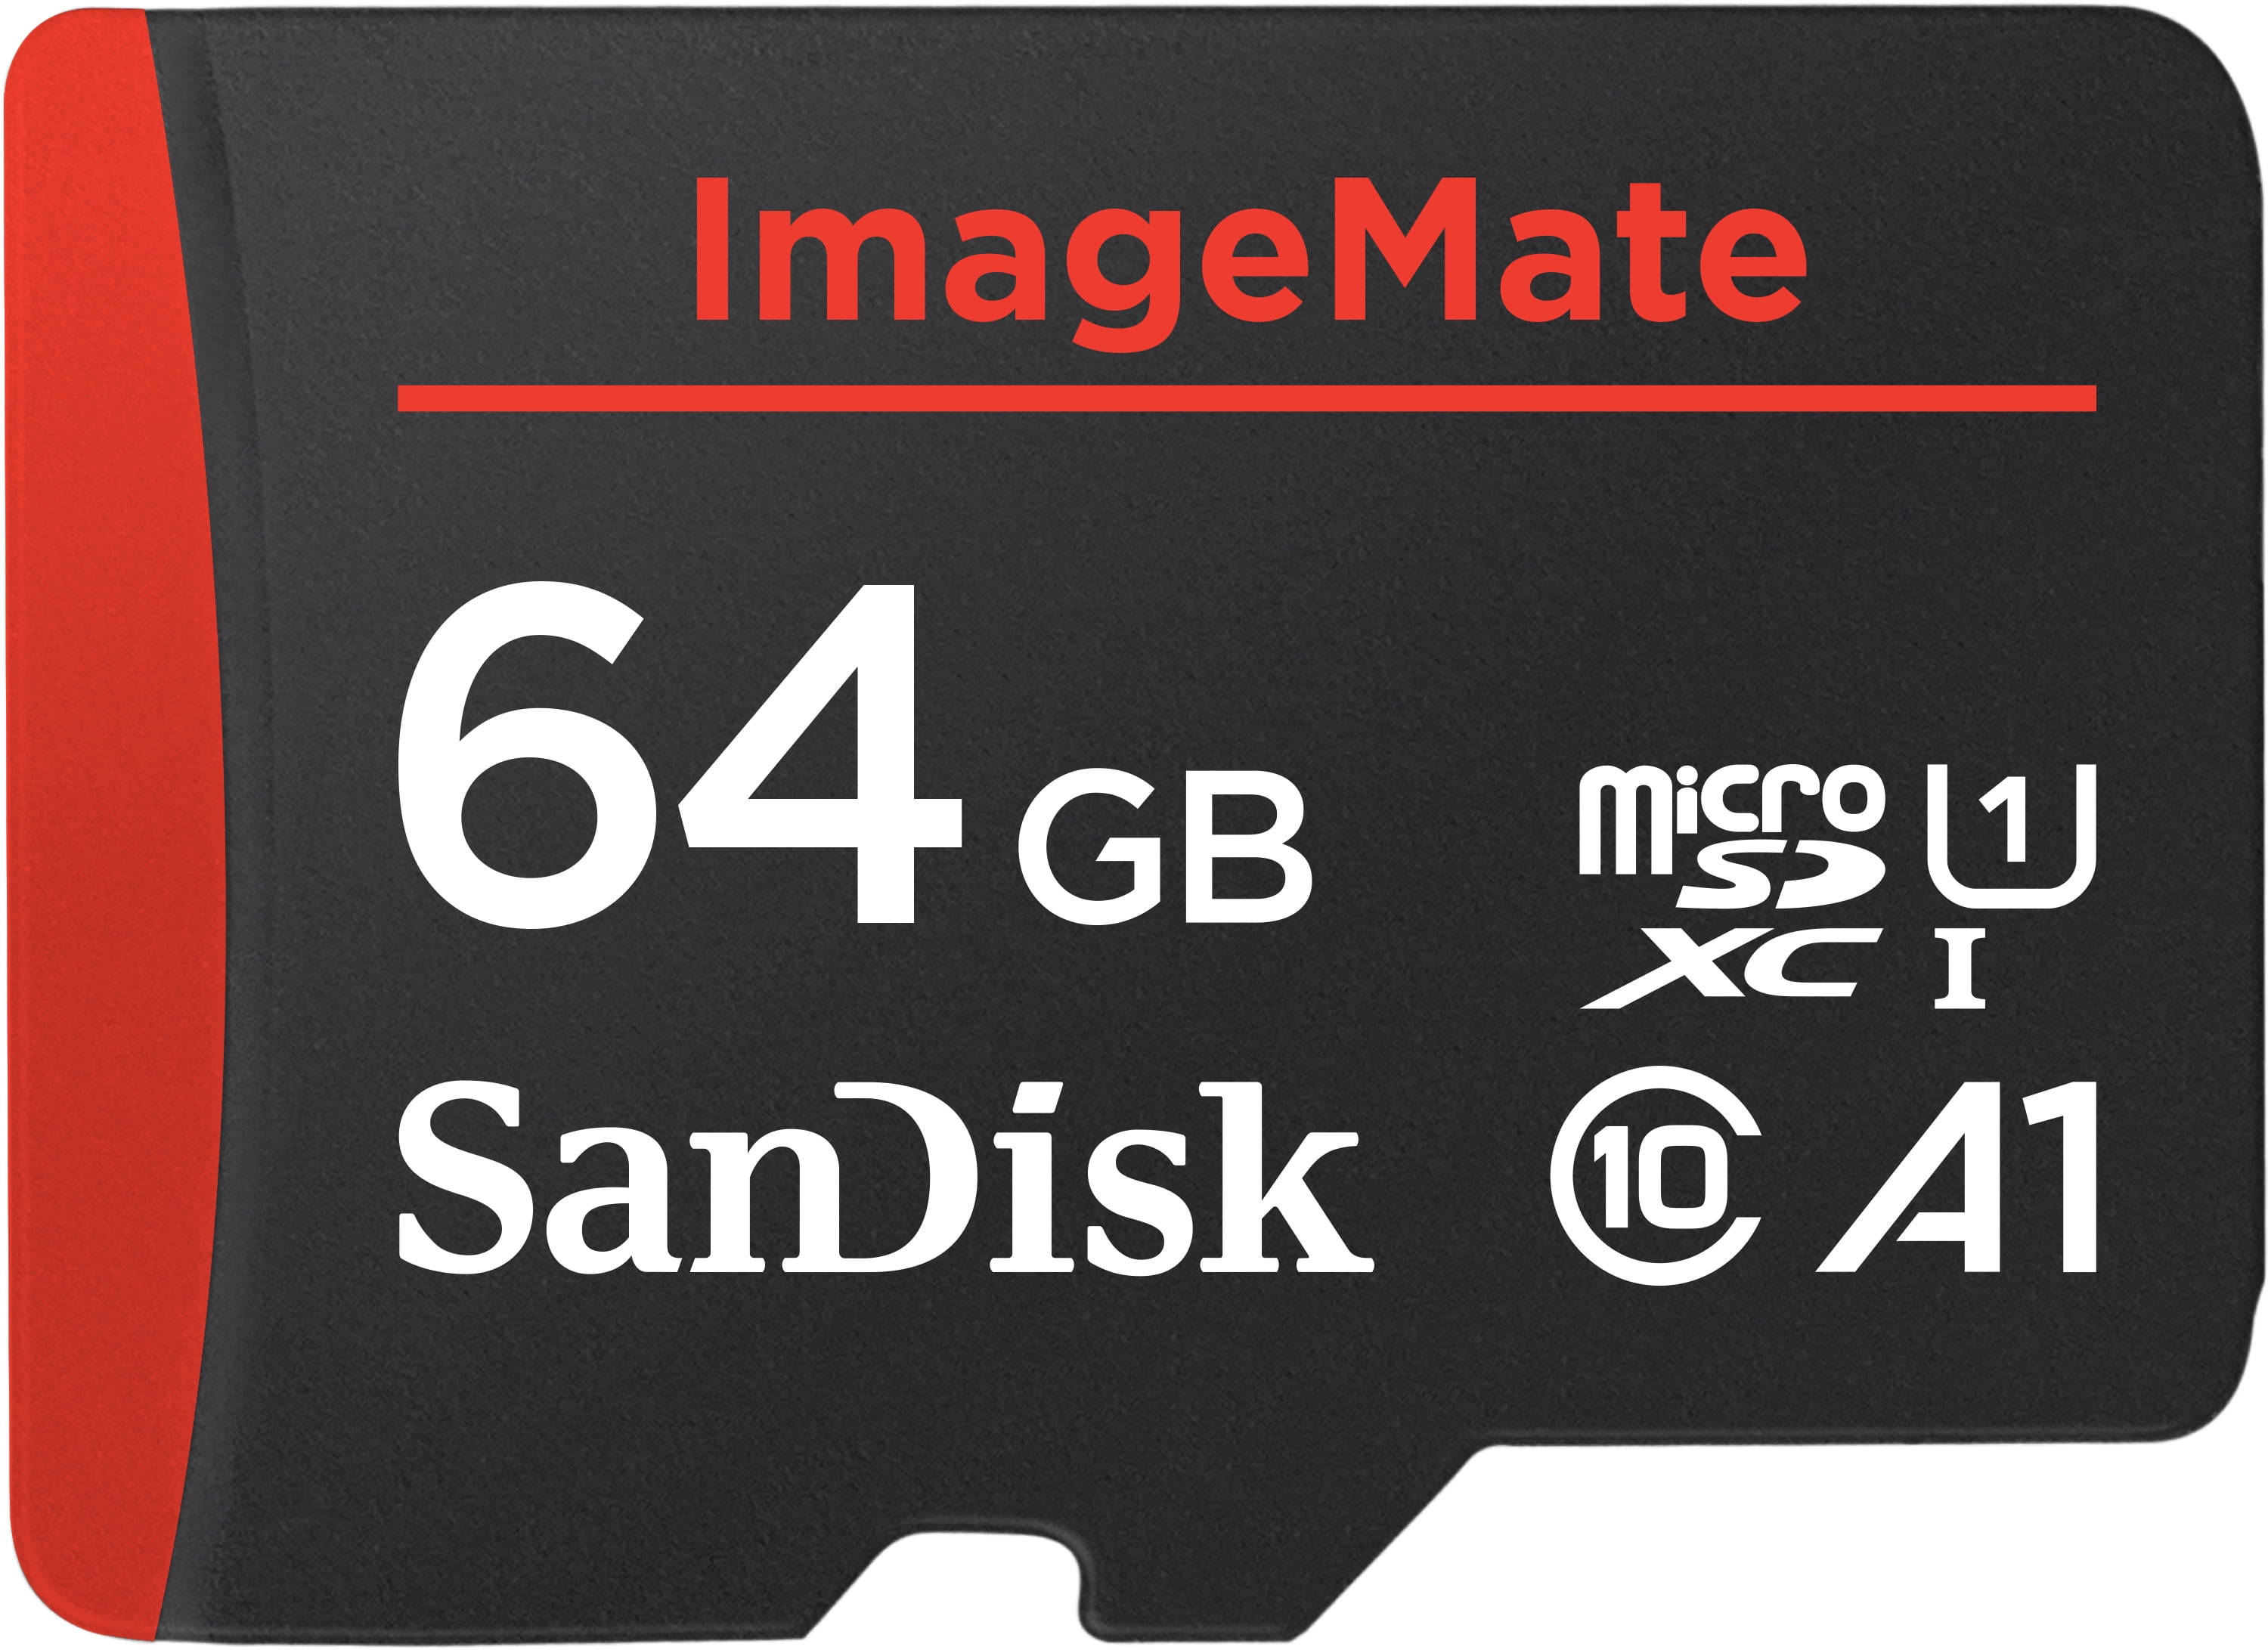 Sandisk 64gb Imagemate Microsdxc Uhs 1 Memory Card With Adapter C10 U1 Full Hd A1 Micro Sd Card Walmart Com Walmart Com